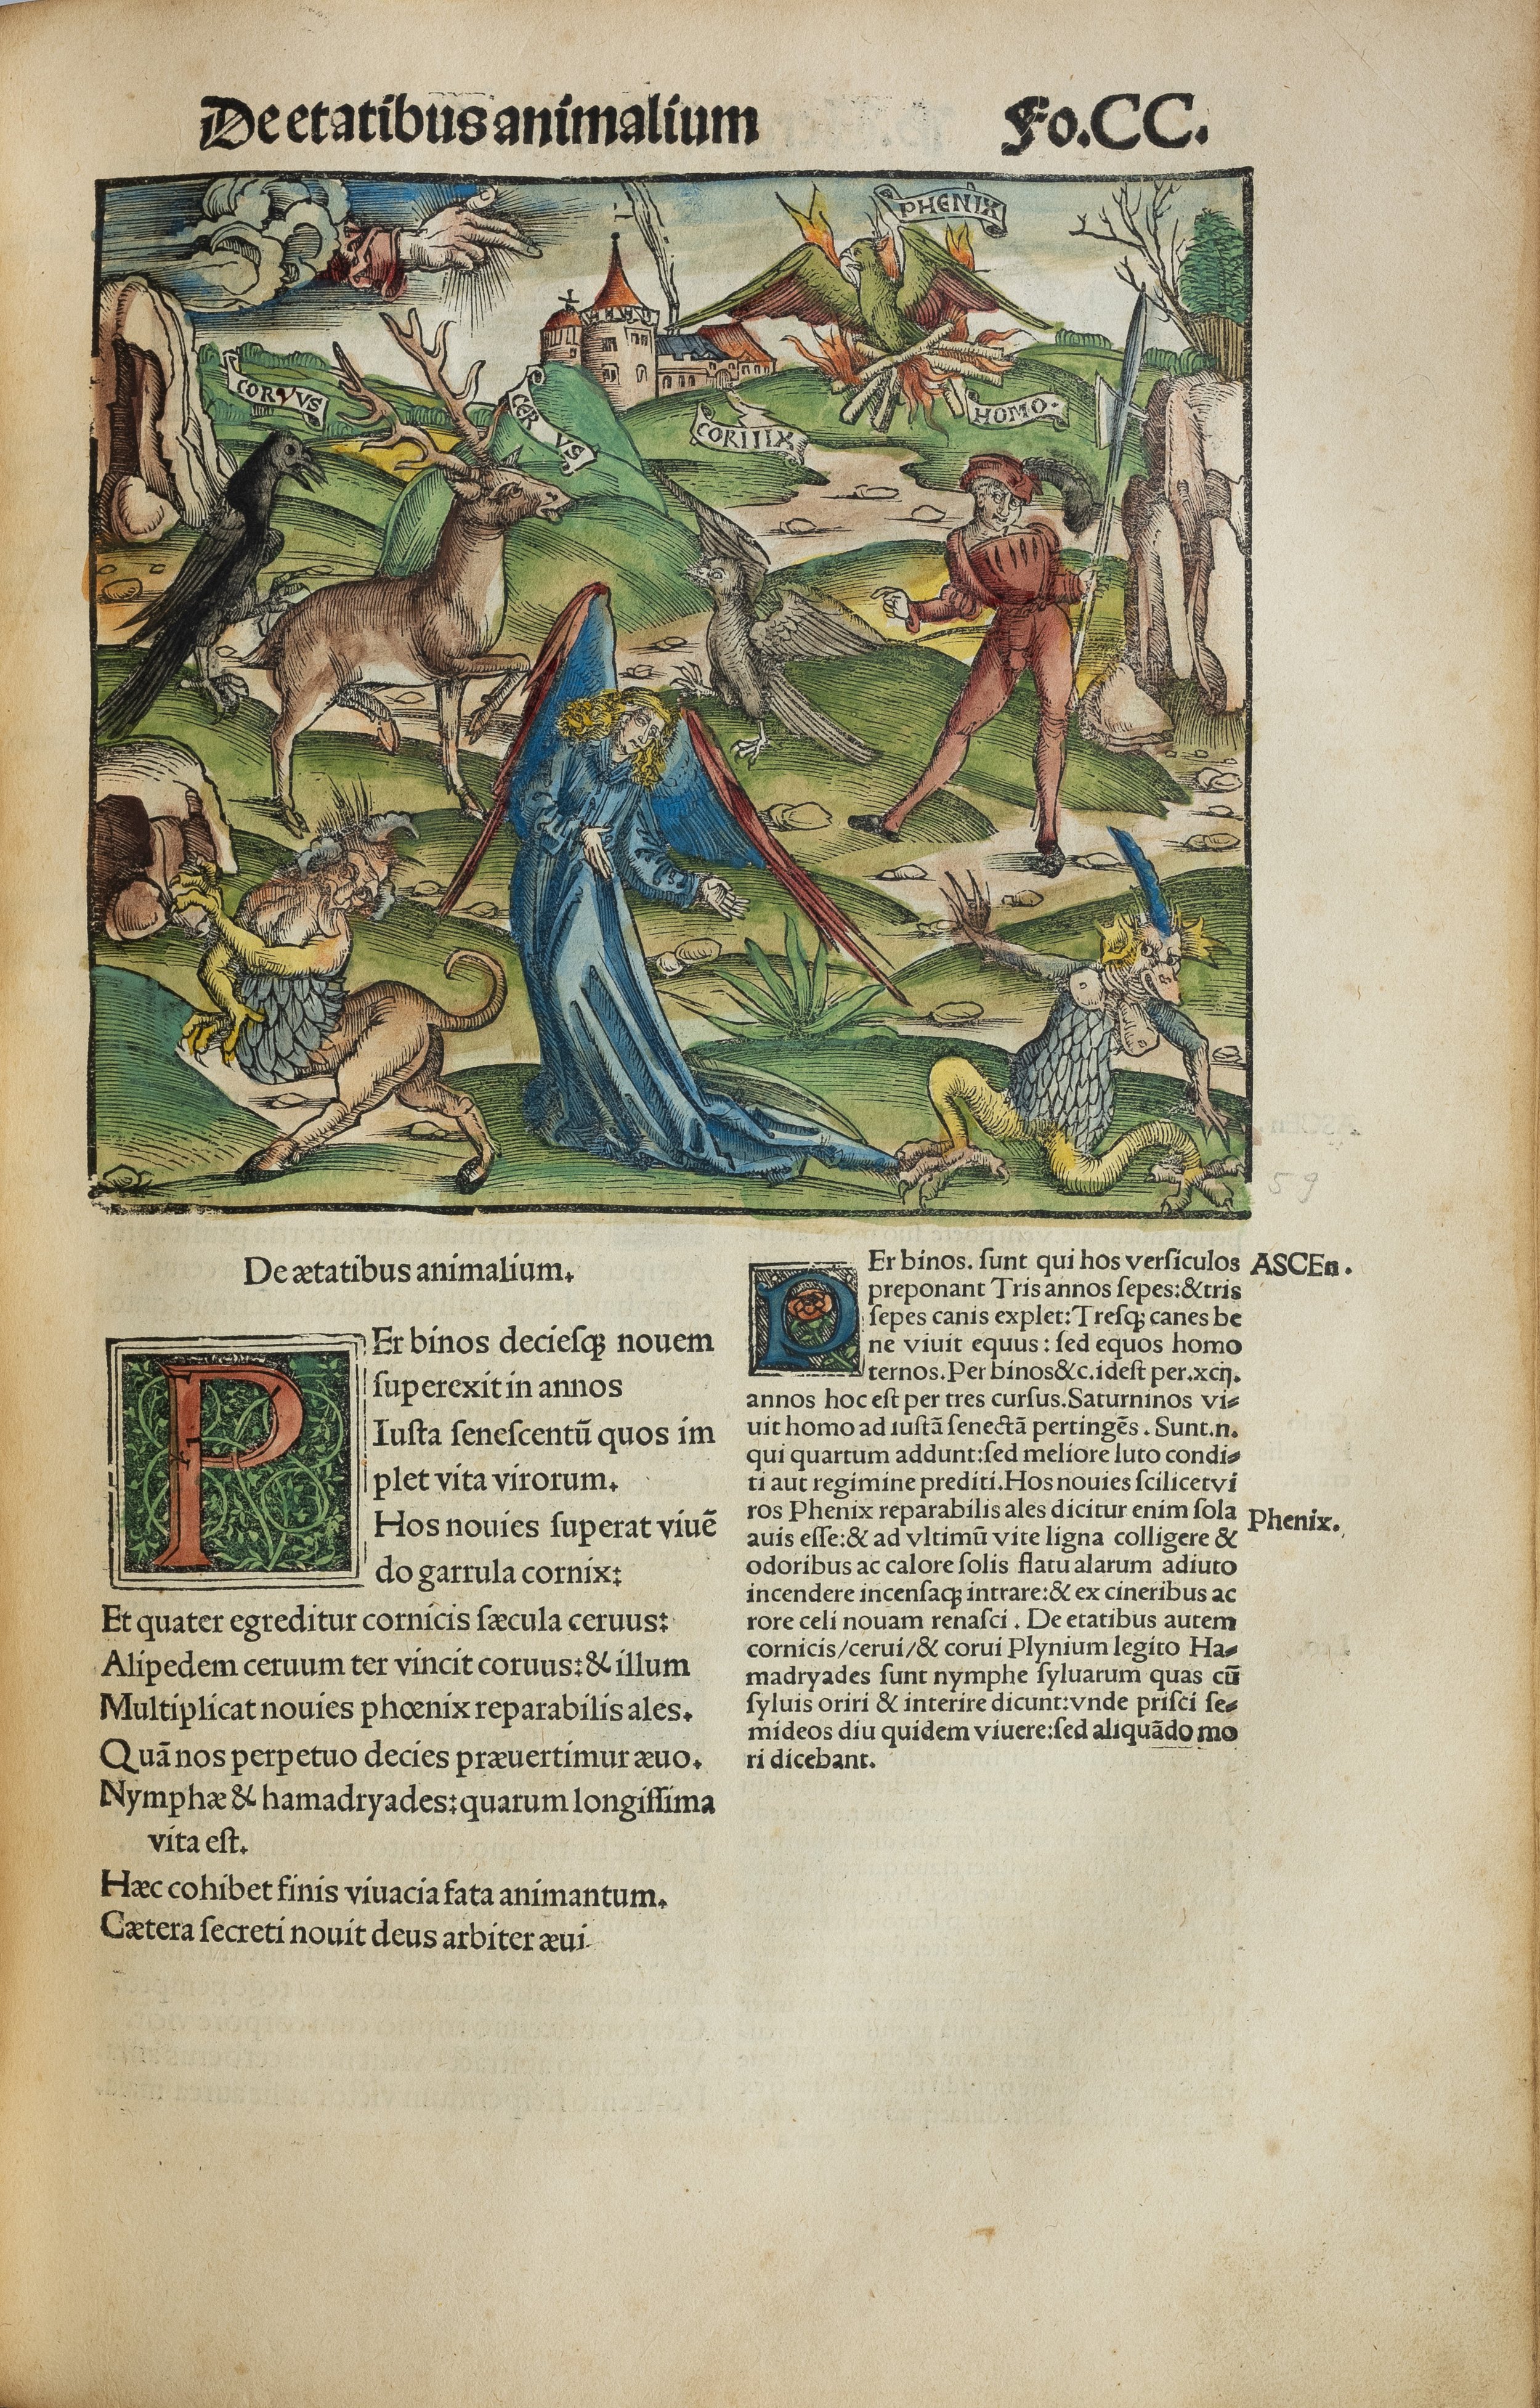 vergil-opera-1517-lyon-hand-coloured-woodcuts-for-sale-13.jpg